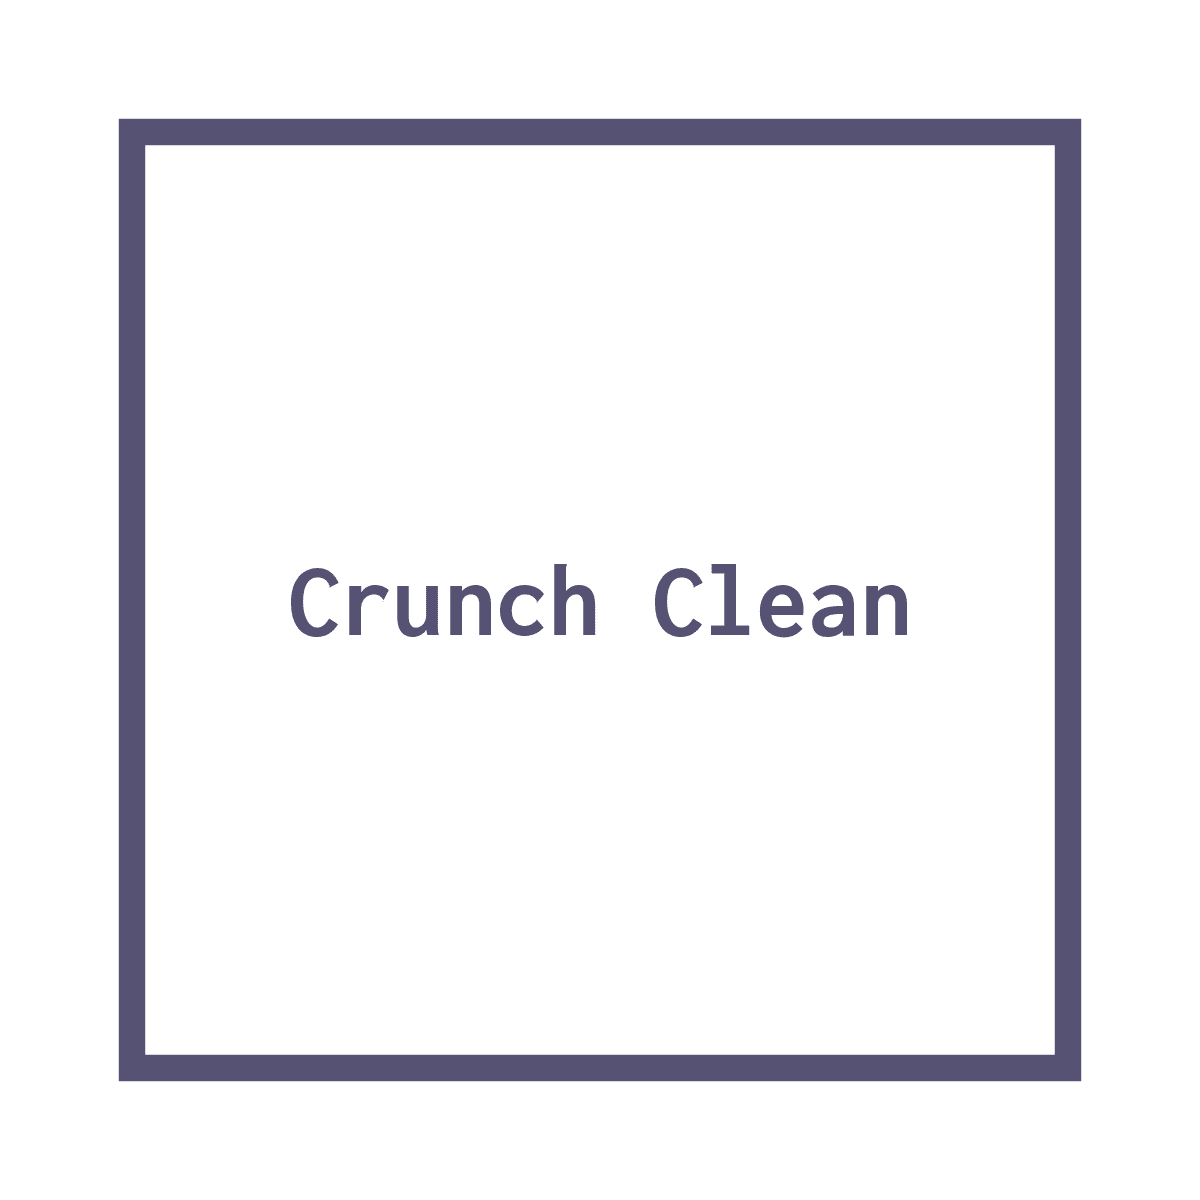 Crunch Clean